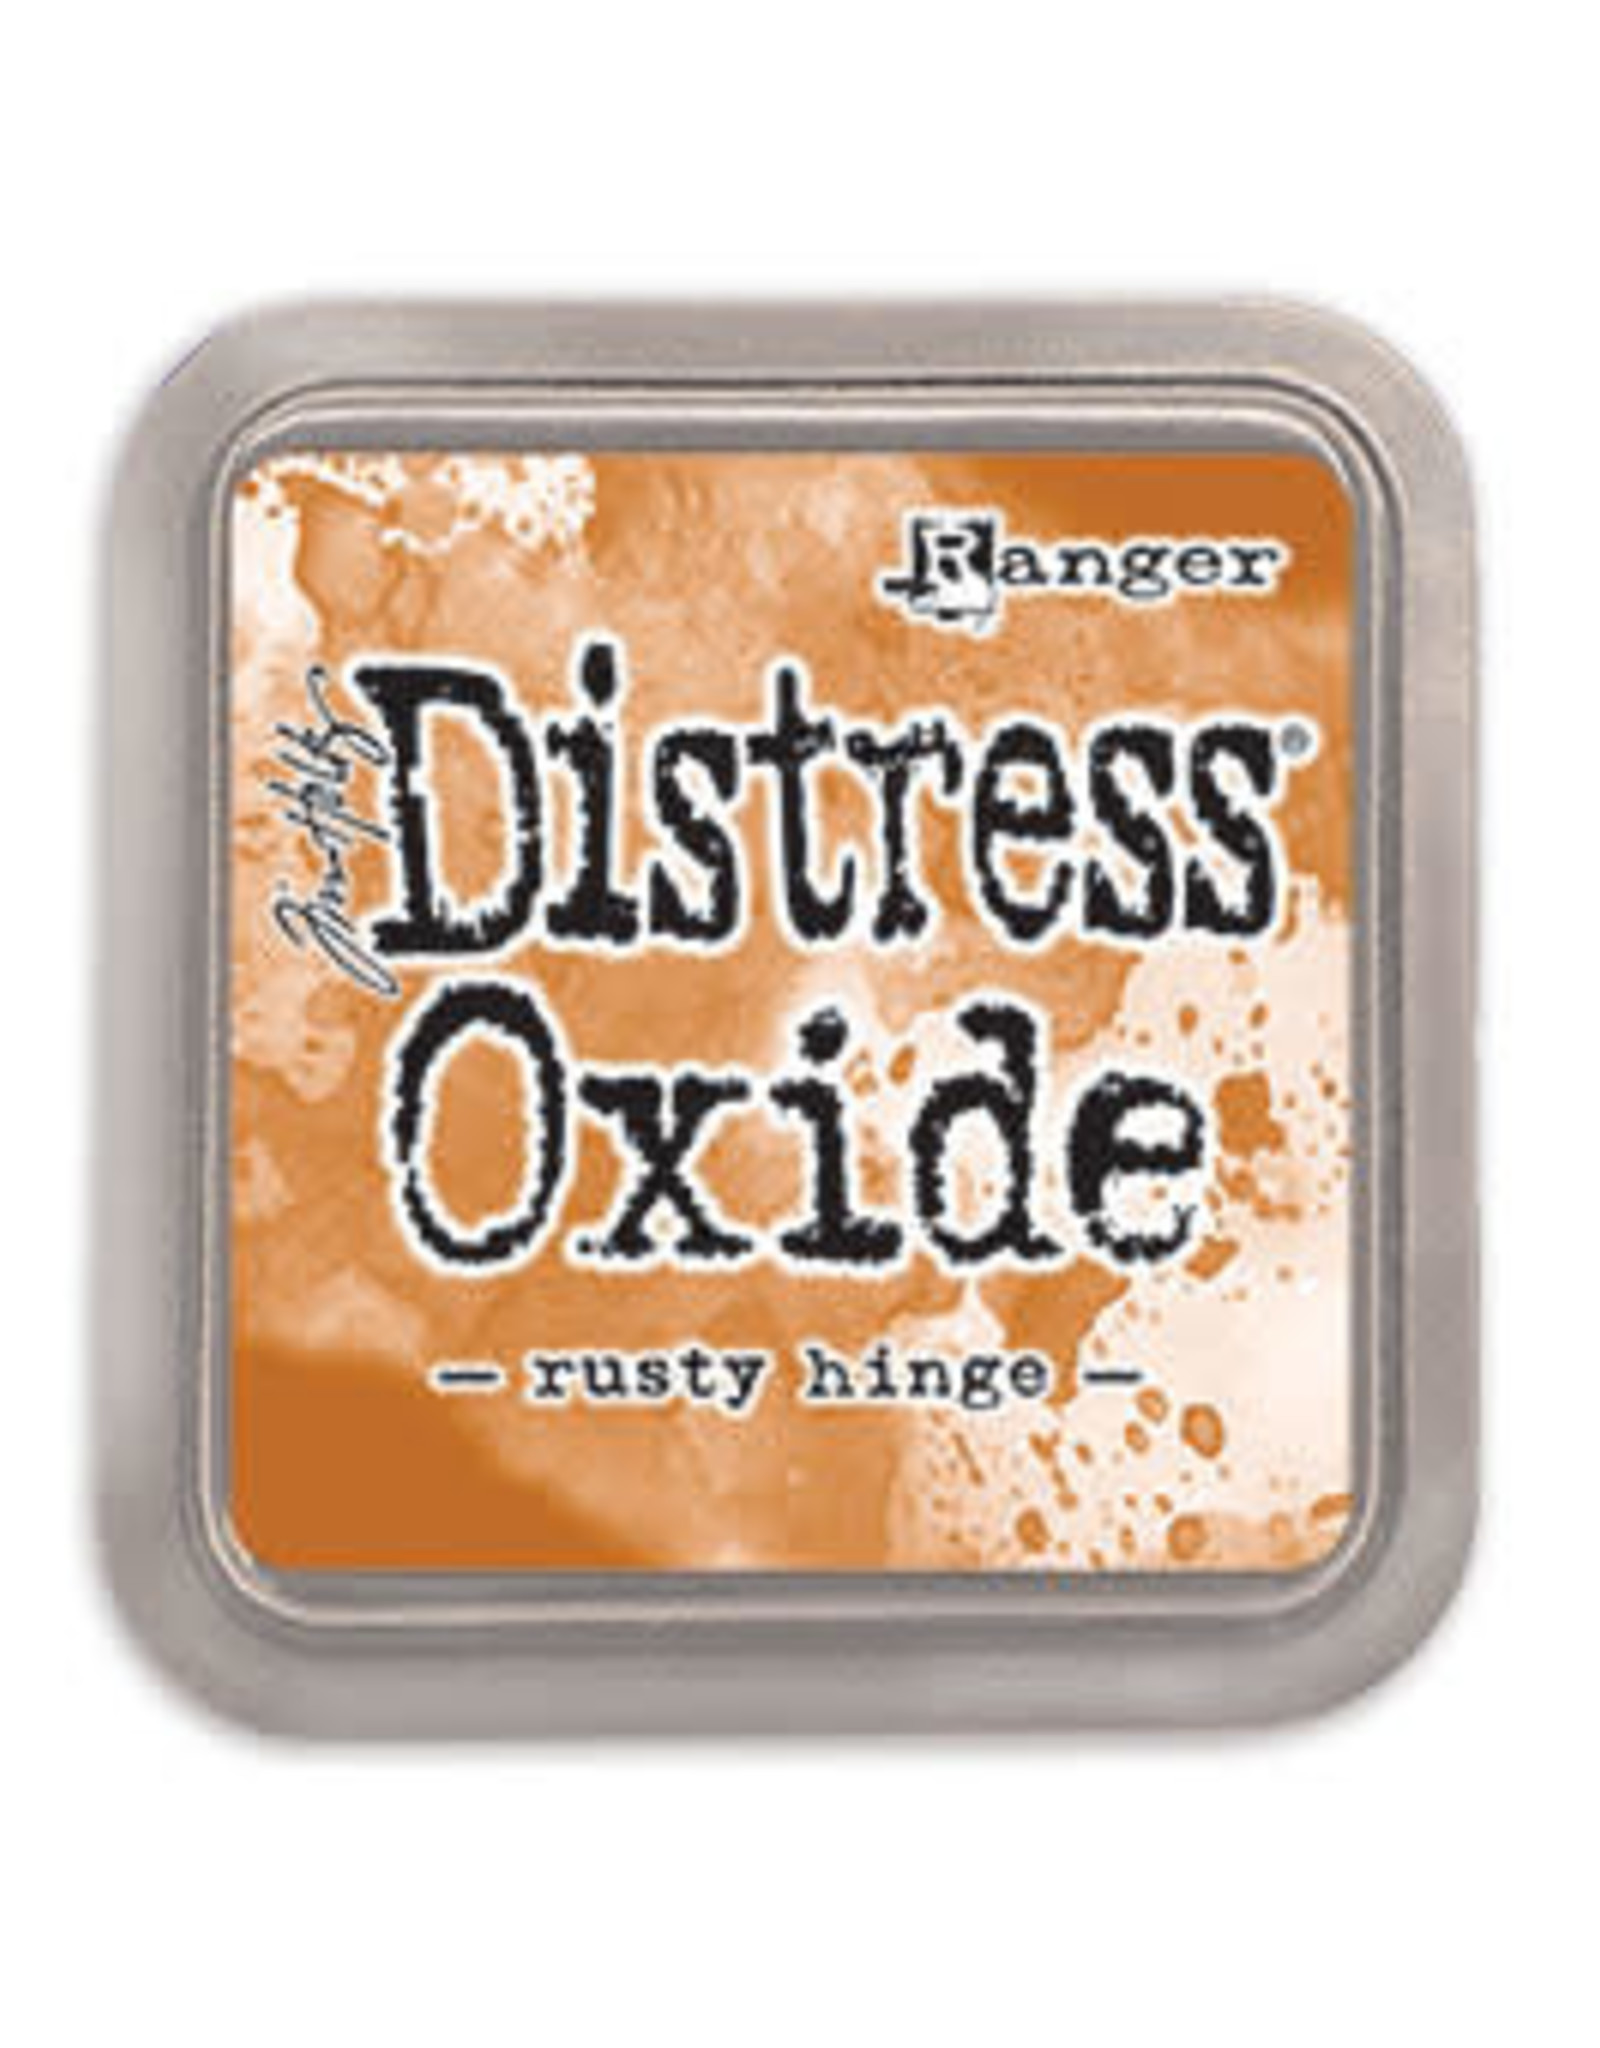 Tim Holtz - Ranger Distress Oxide Rusty Hinge